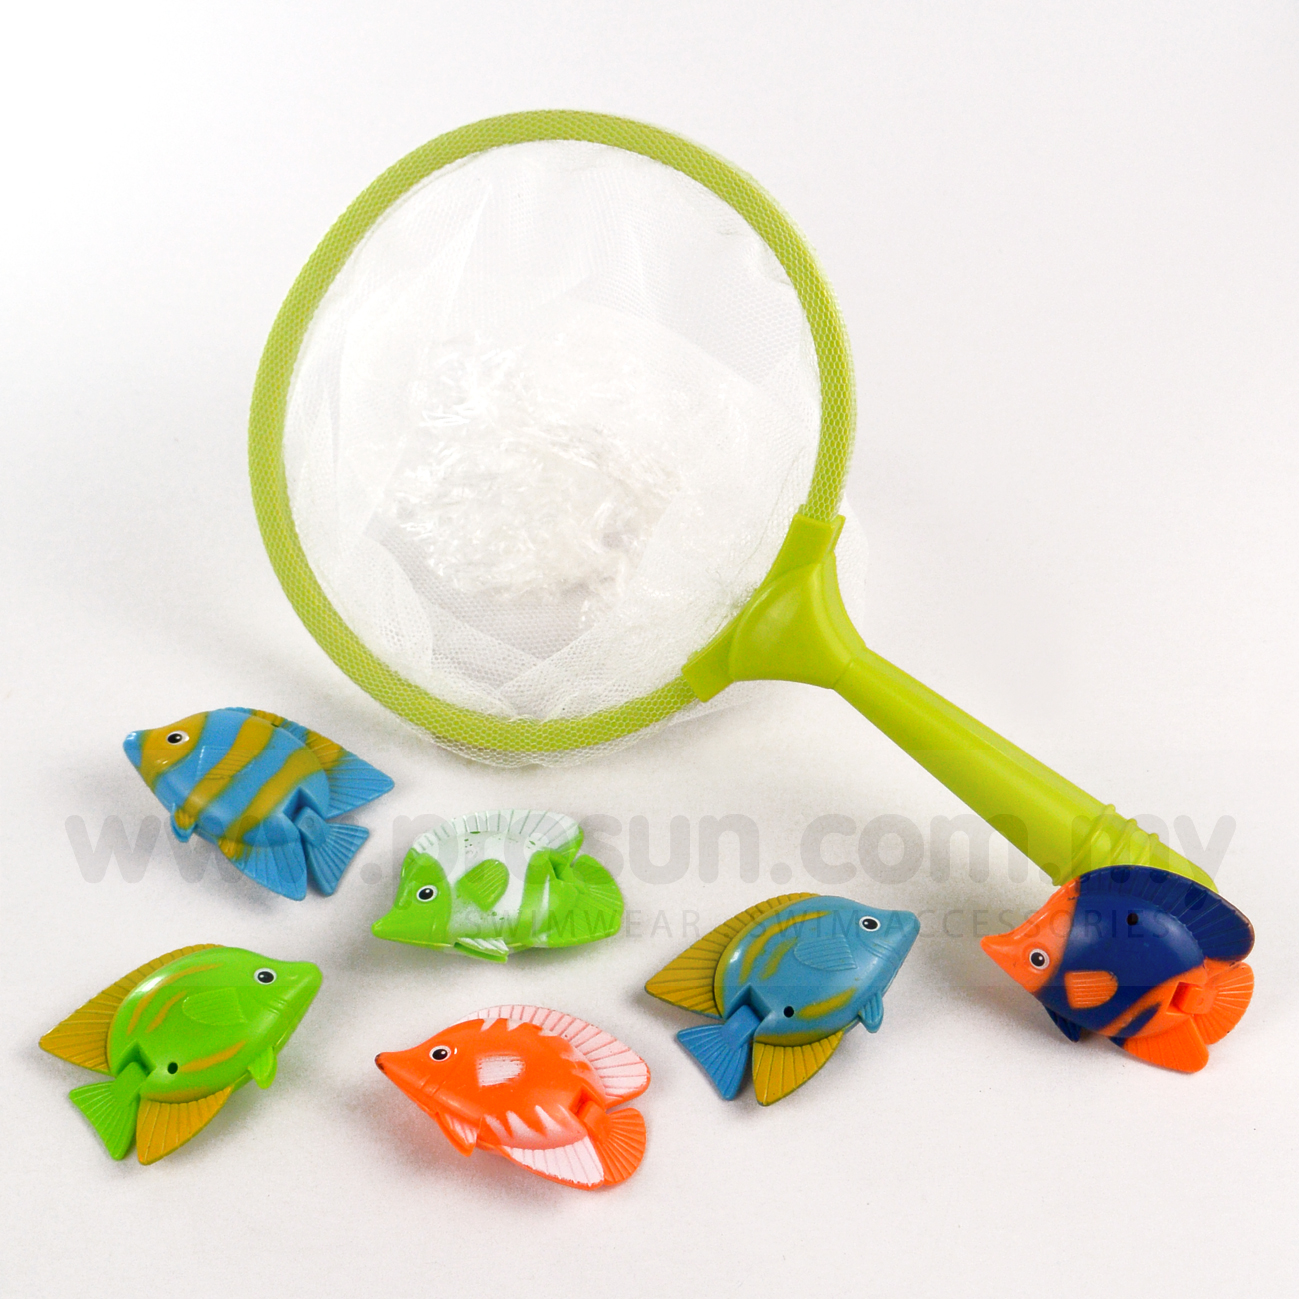 KiddoZone 36PCS Magnetic Fishing Pool Toys Game for Kids Water